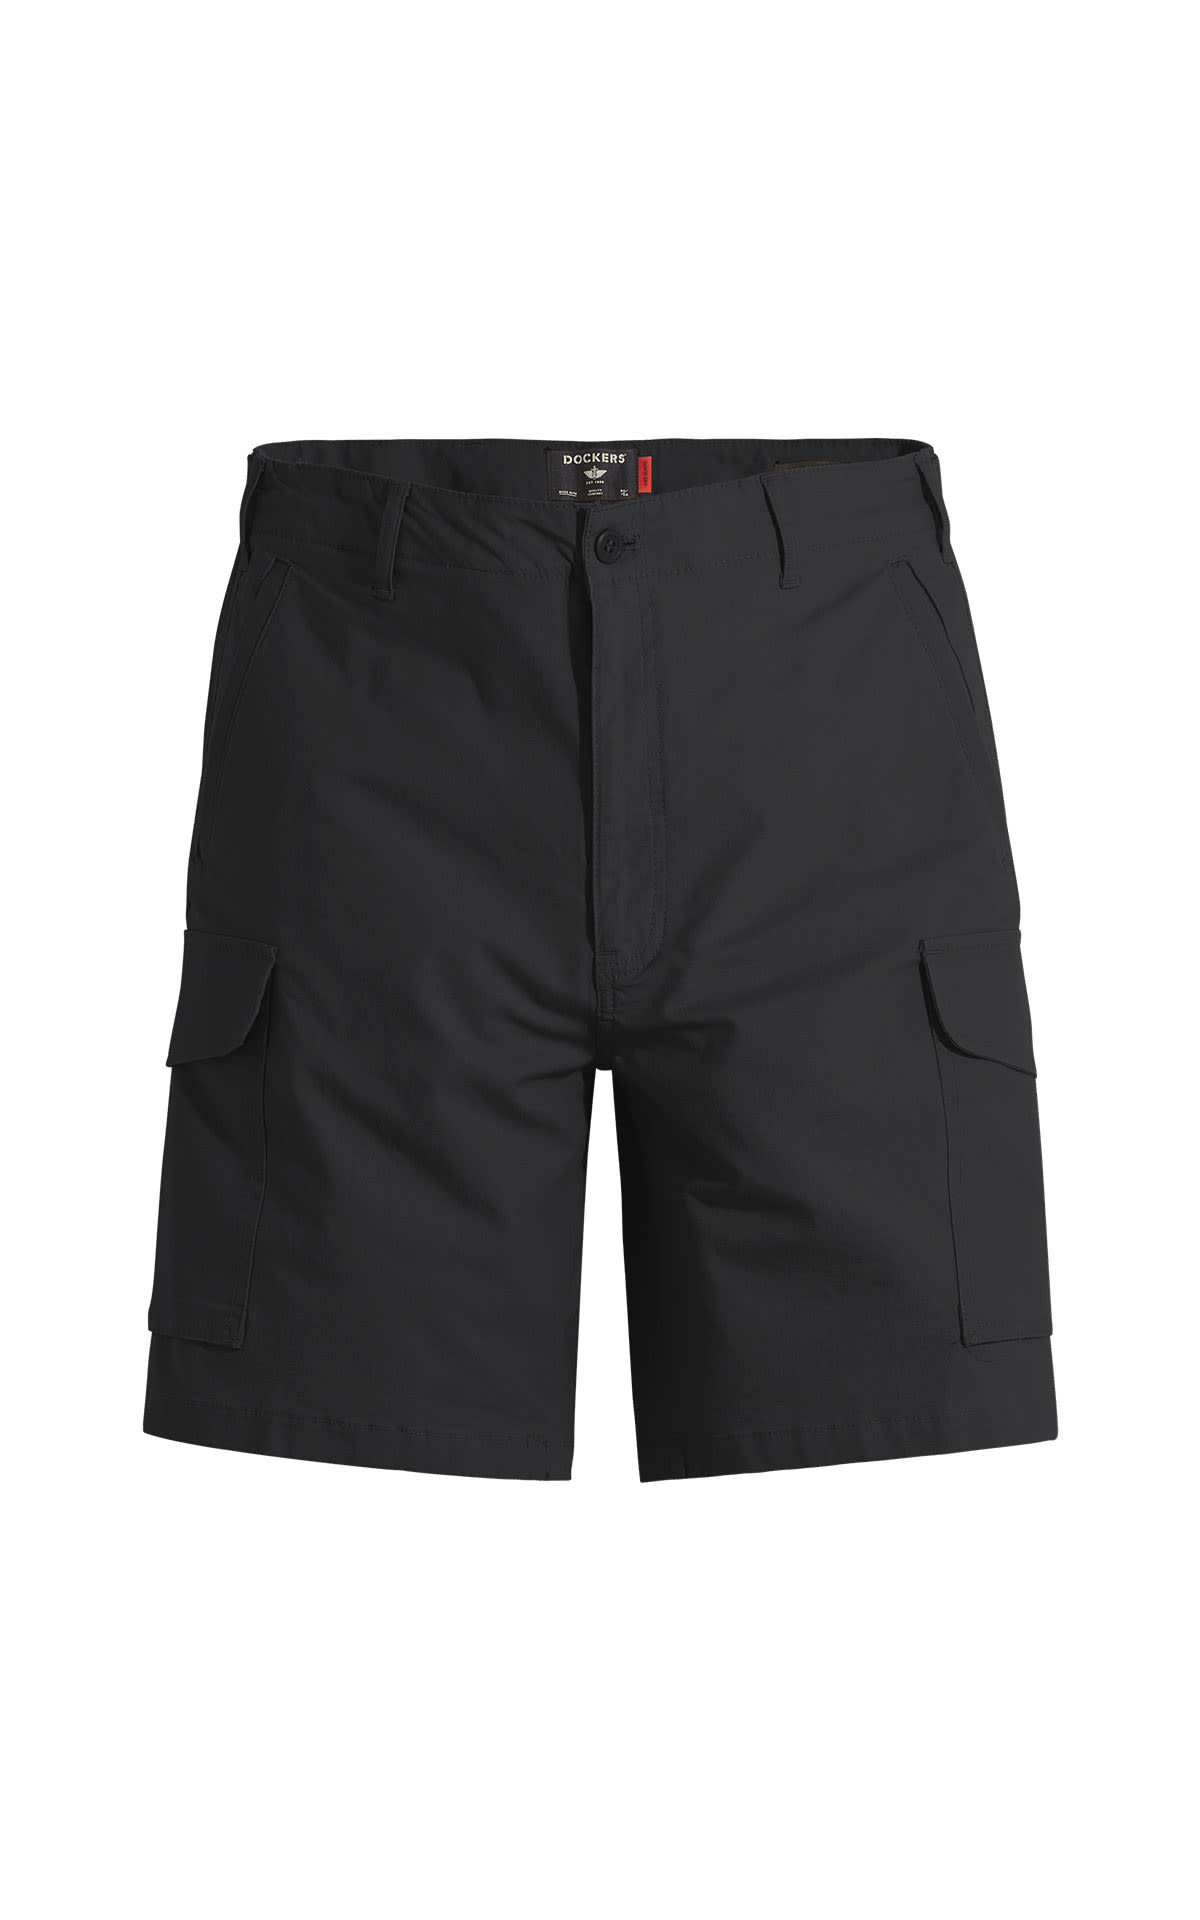 Blakc shorts Dockers